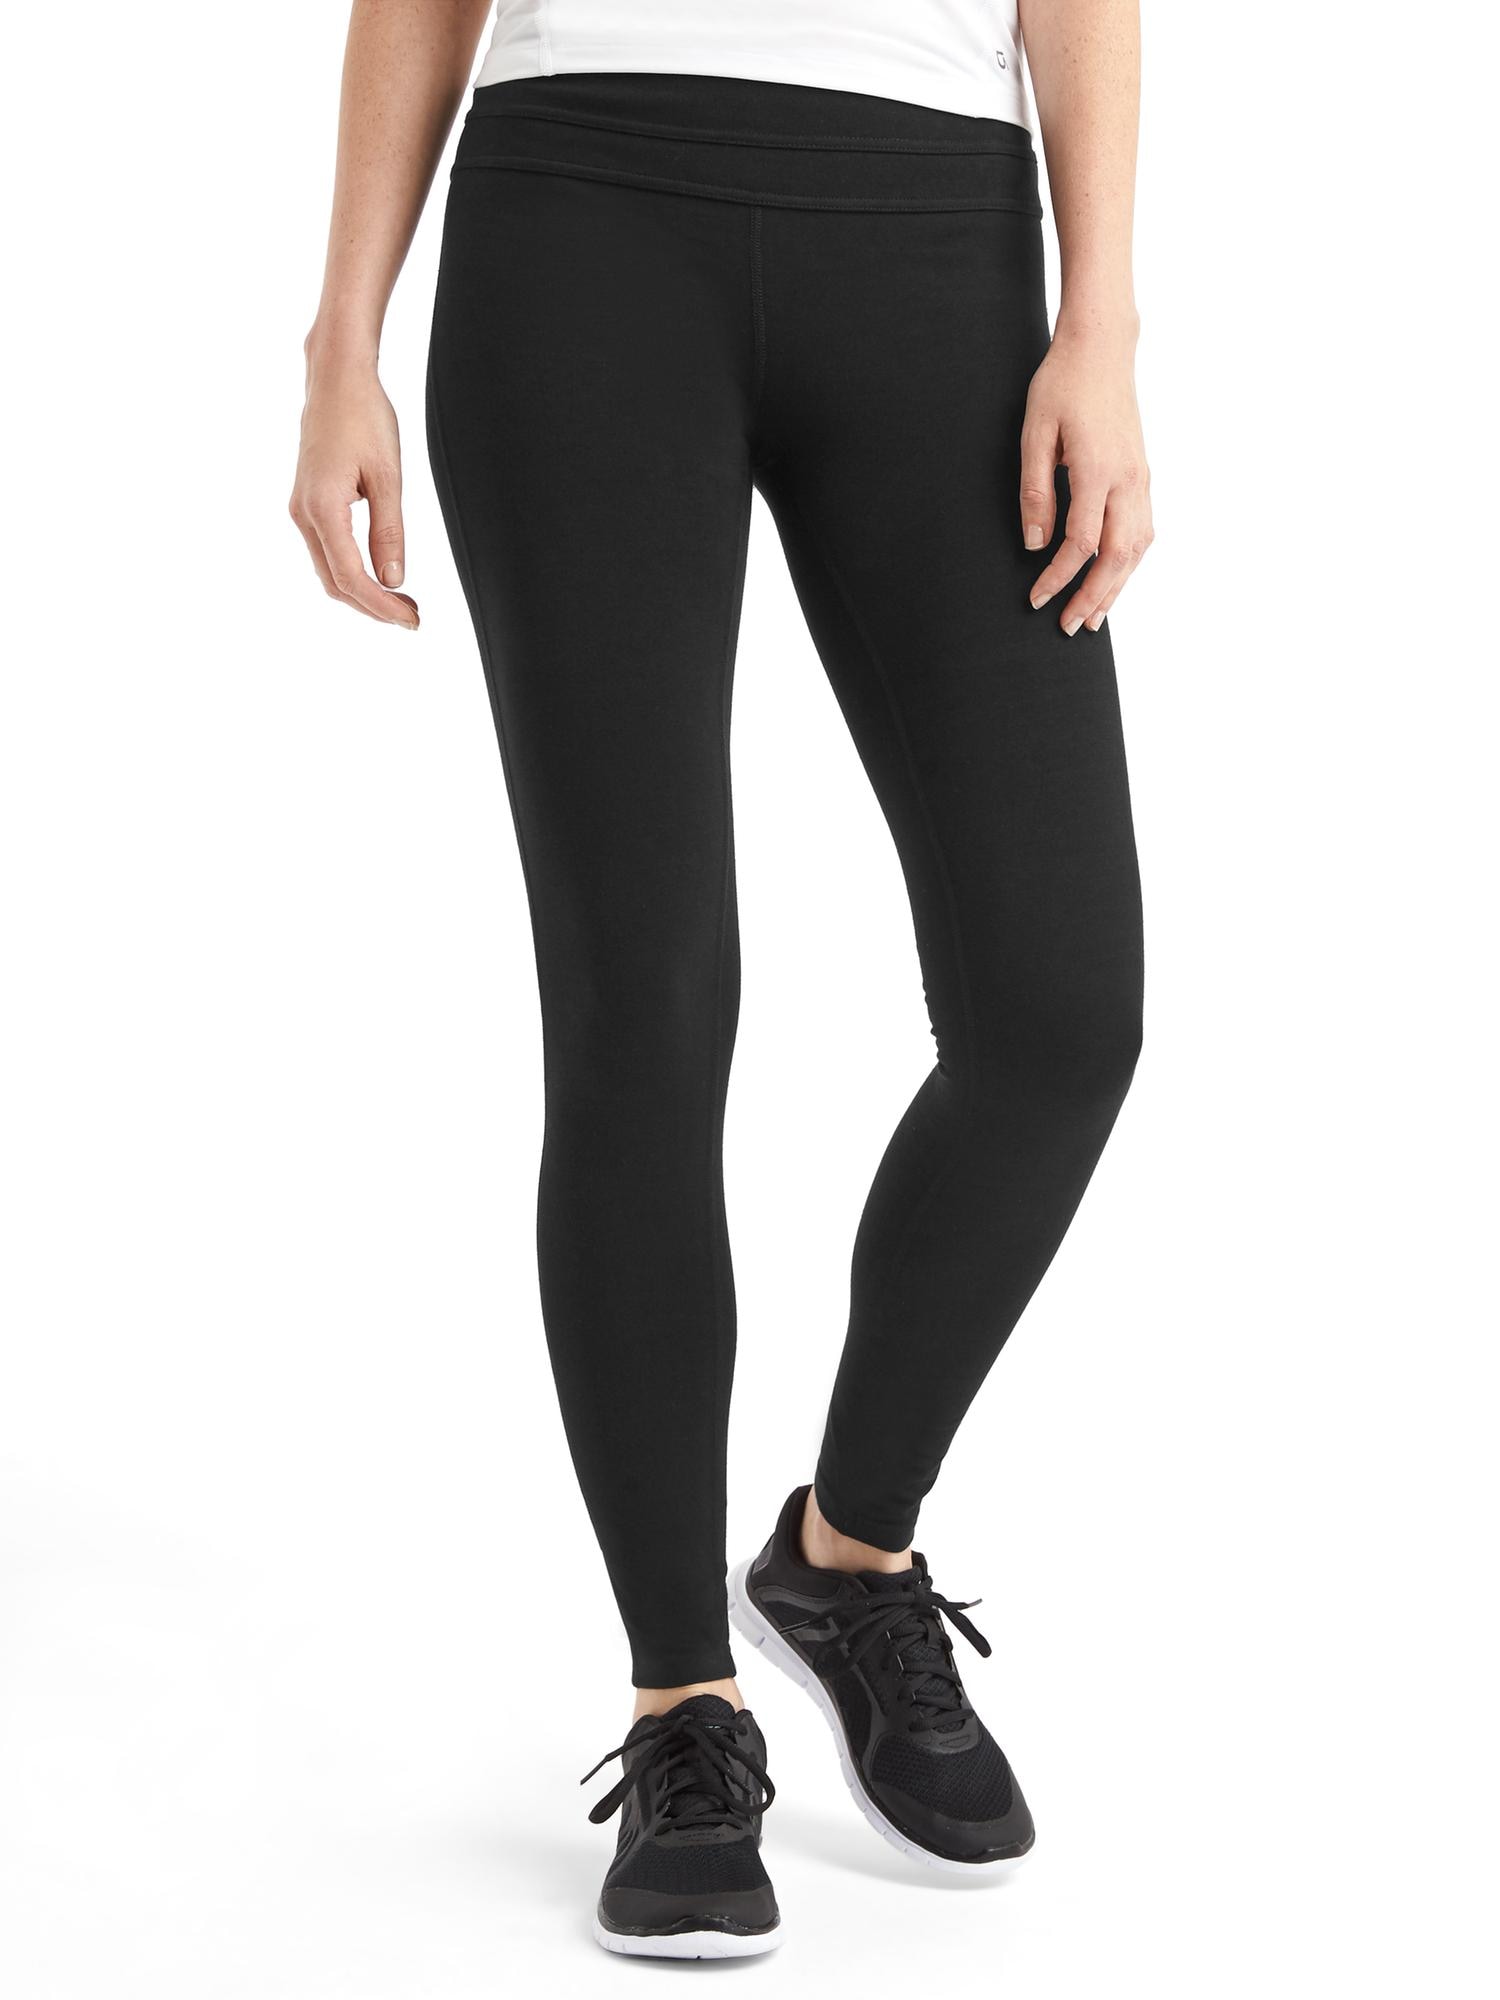 Nike Performance HI RISE - Leggings - medium olive/black/white/olive 